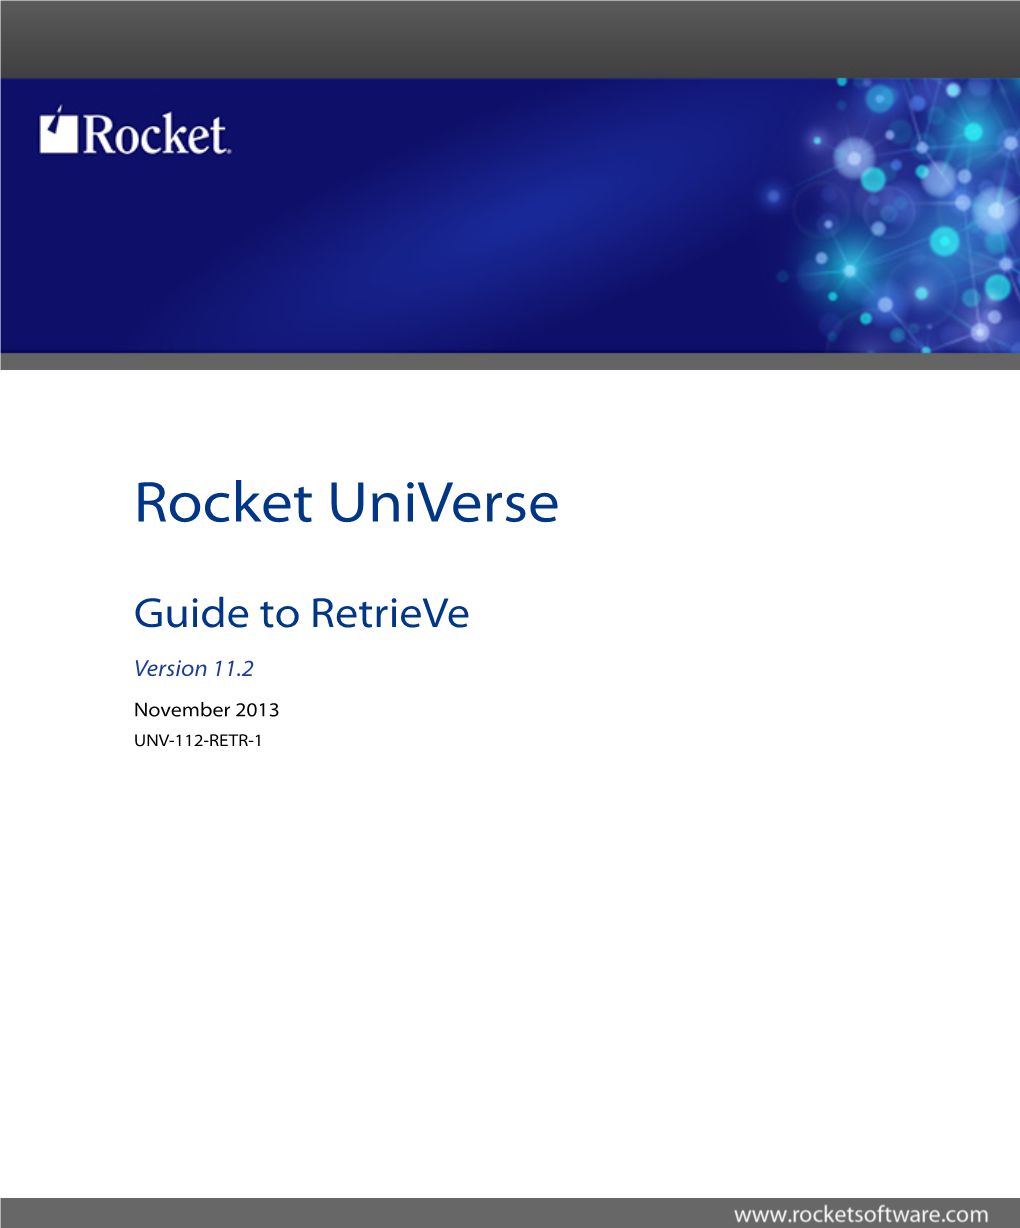 Rocket Universe Guide to Retrieve